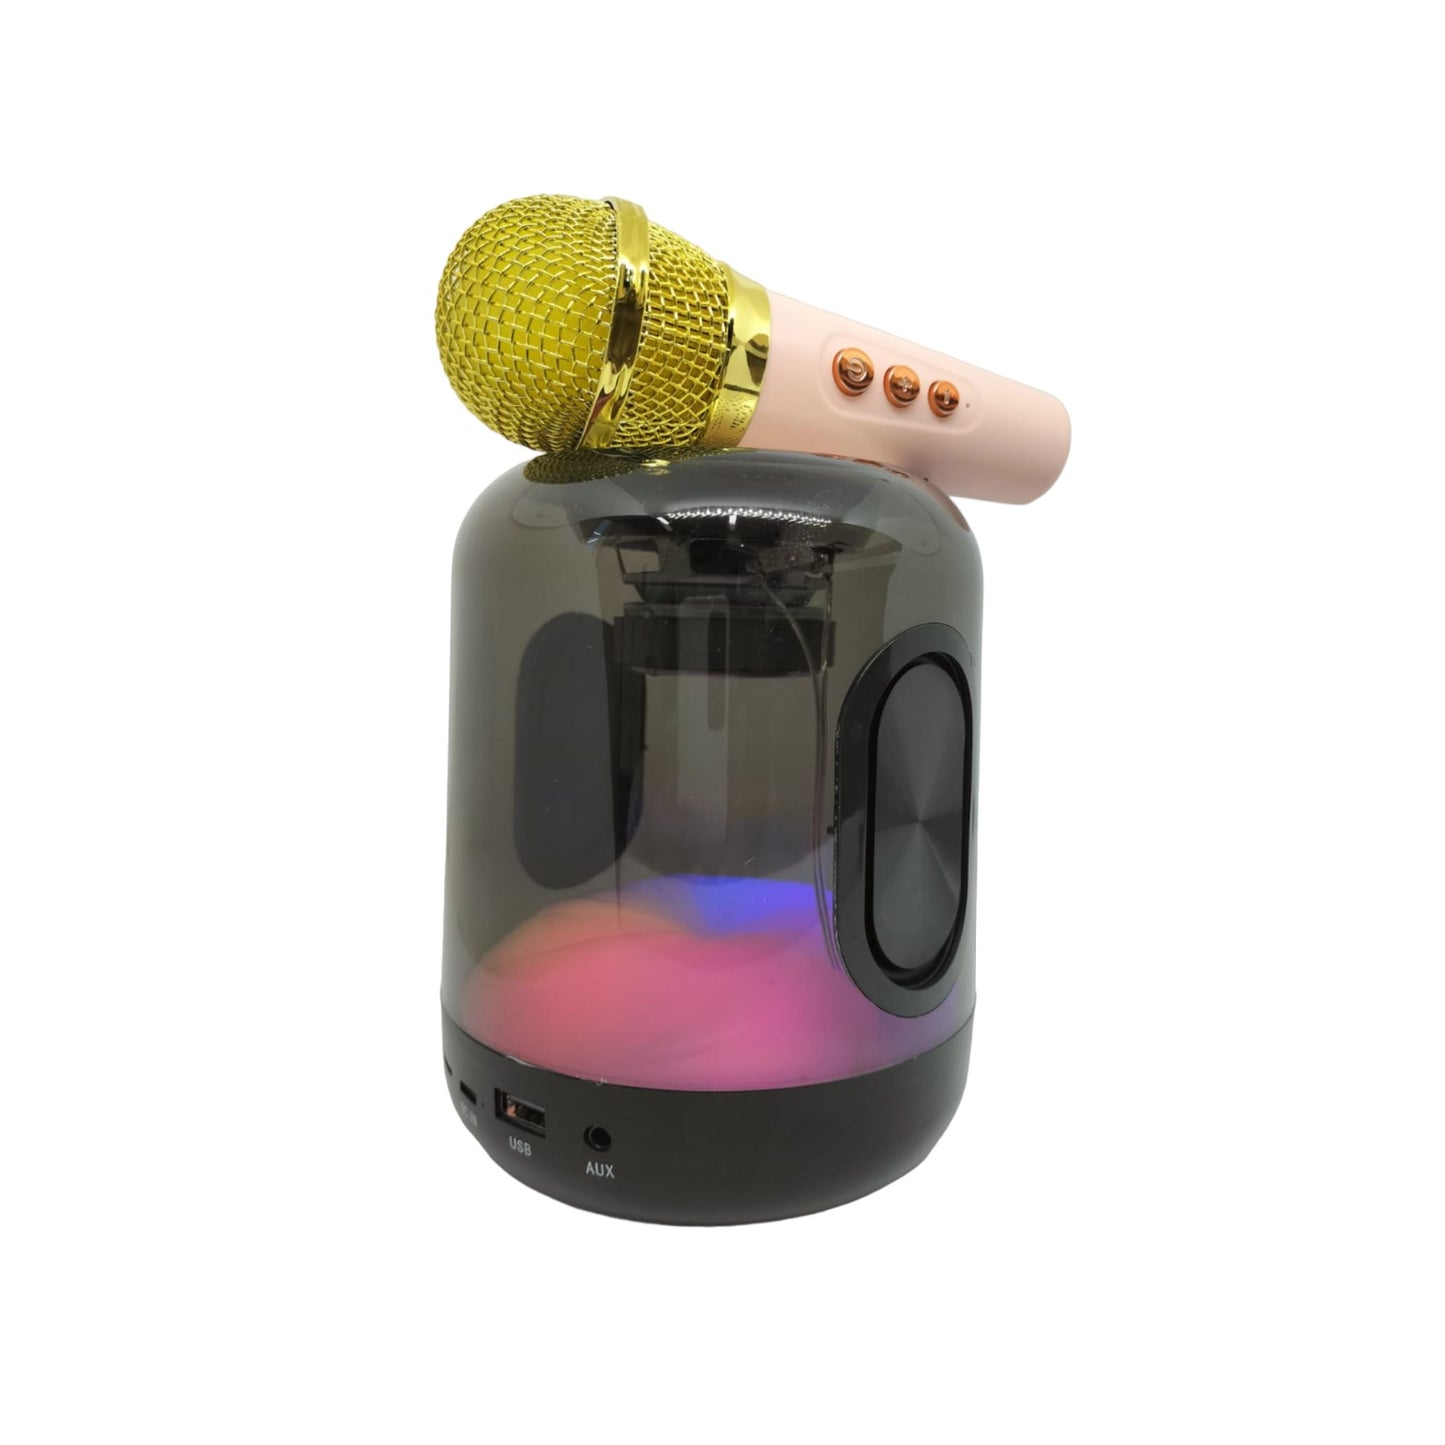 Karaoke Machine, Portable Bluetooth Speaker with Wireless Microphone